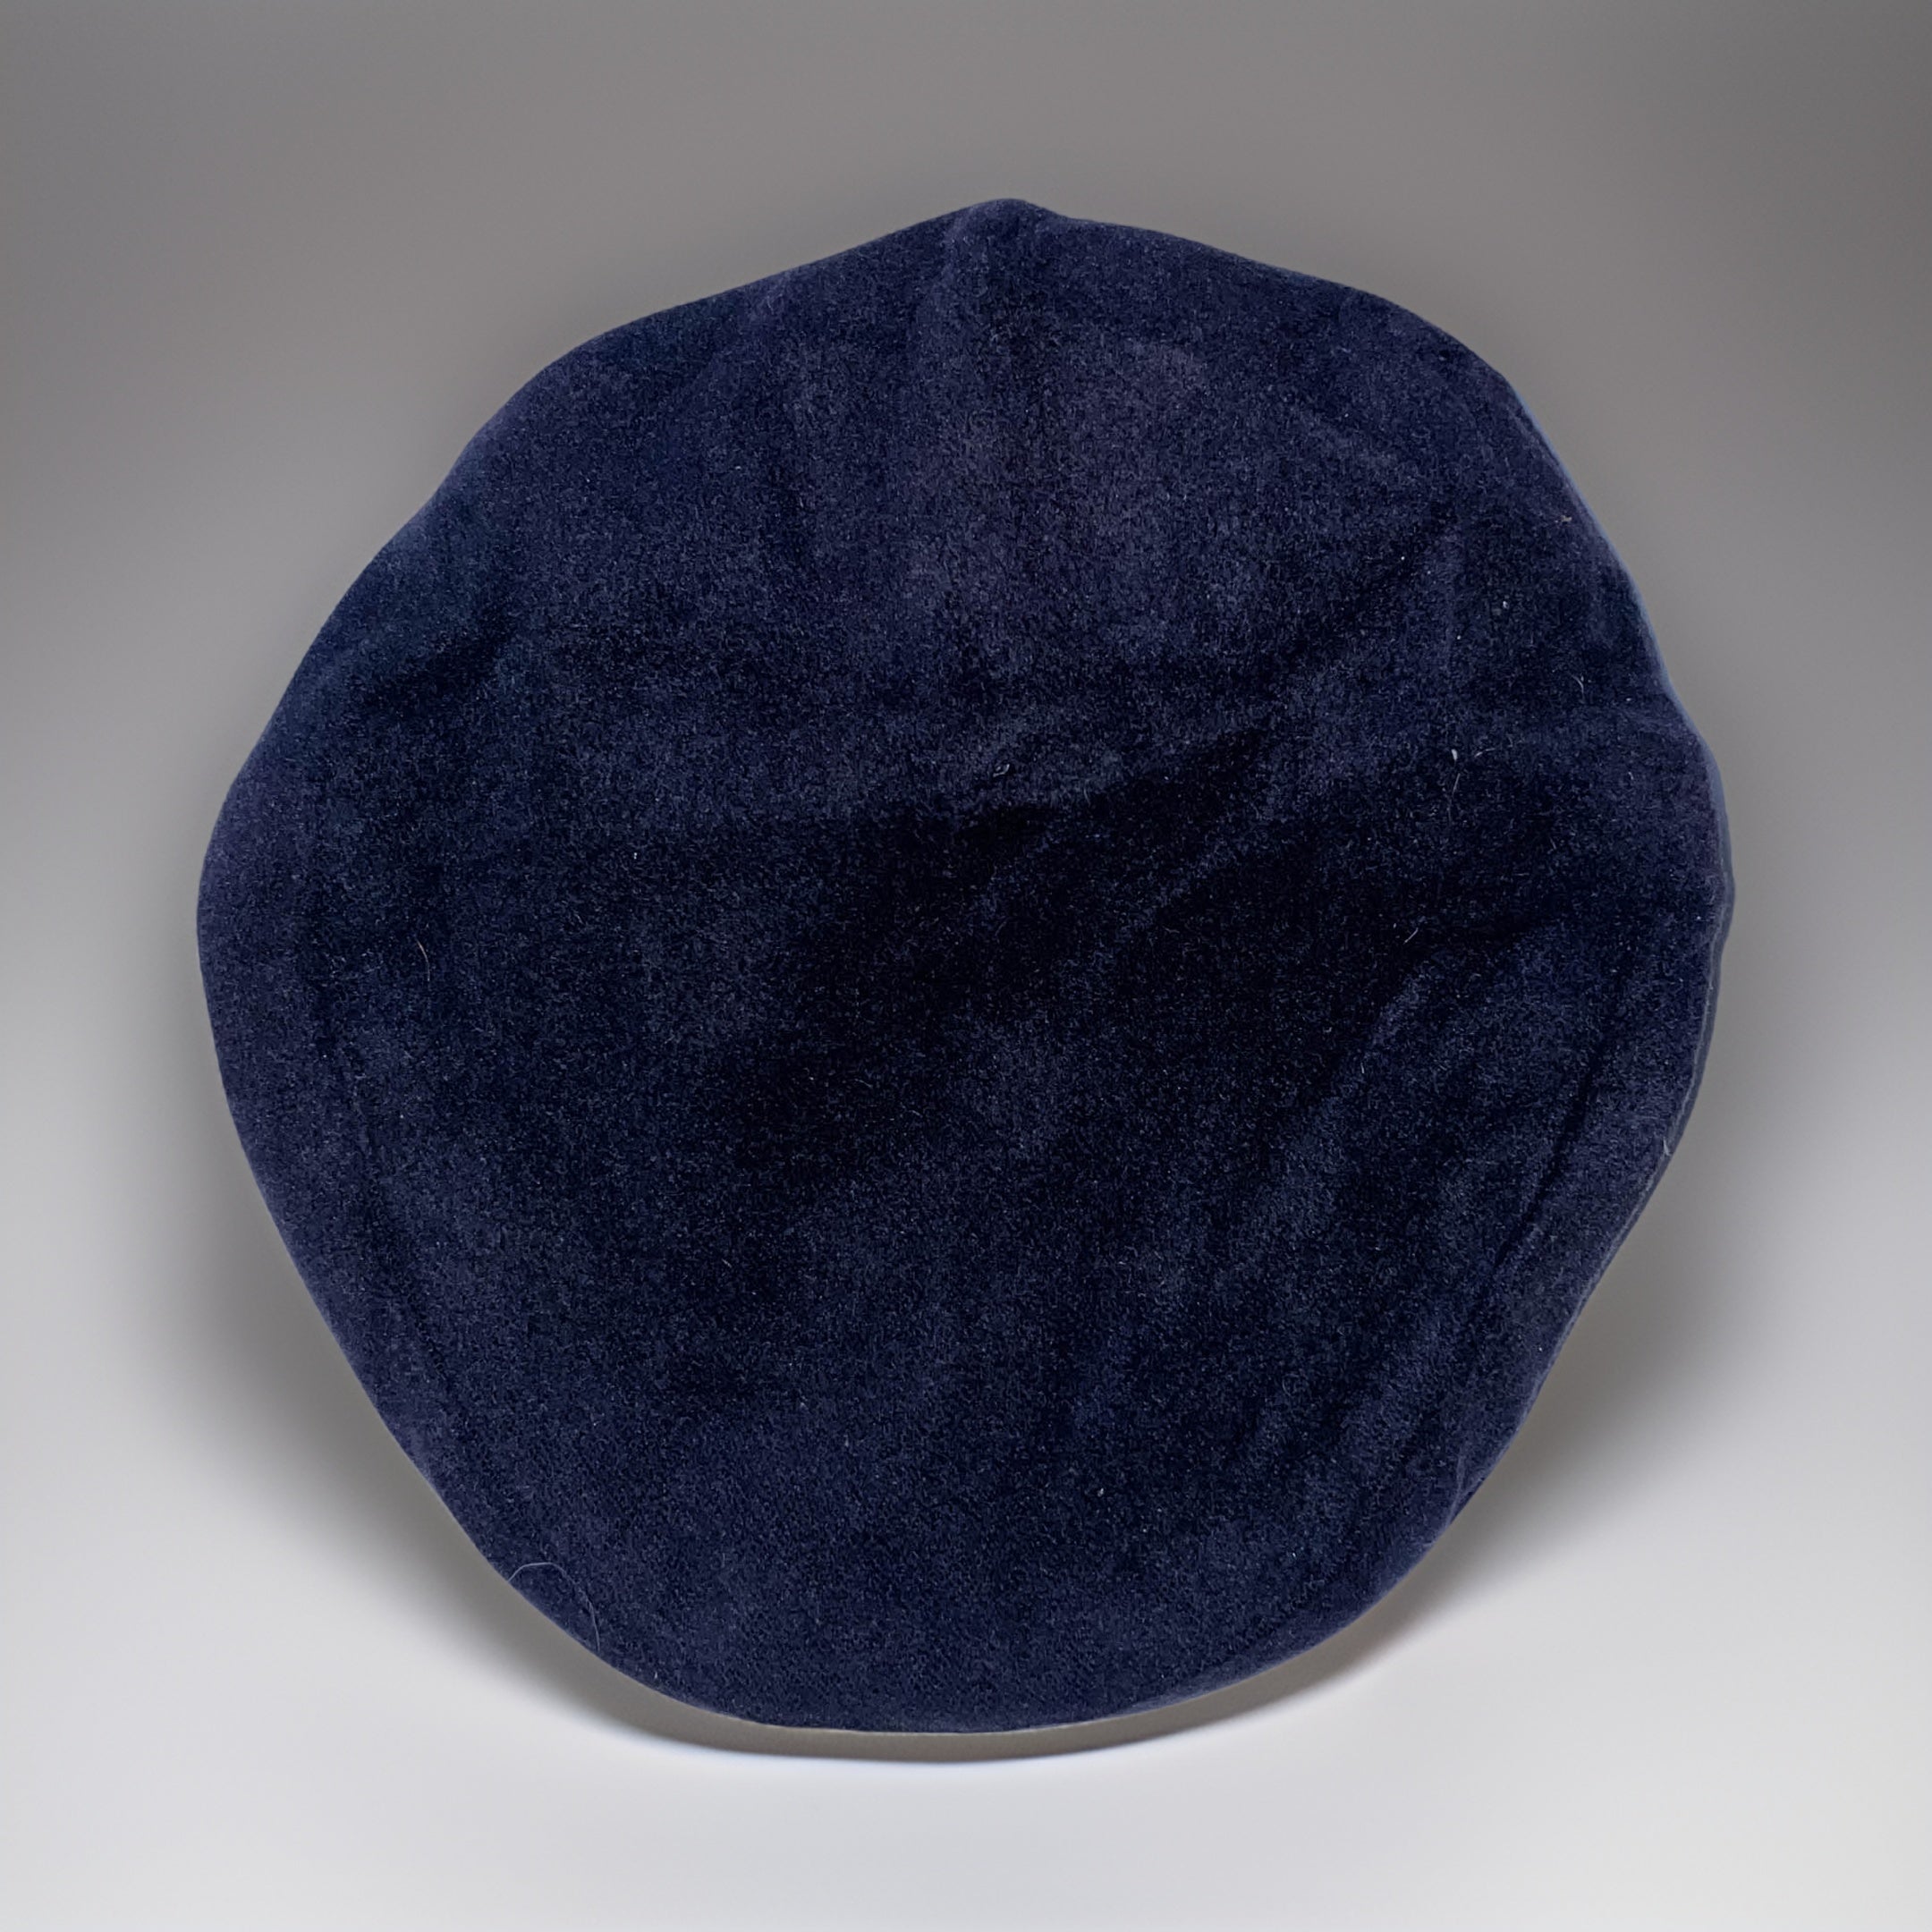 Vintage Hats of Ireland castlebars tailored cashmere navy blue flat hat